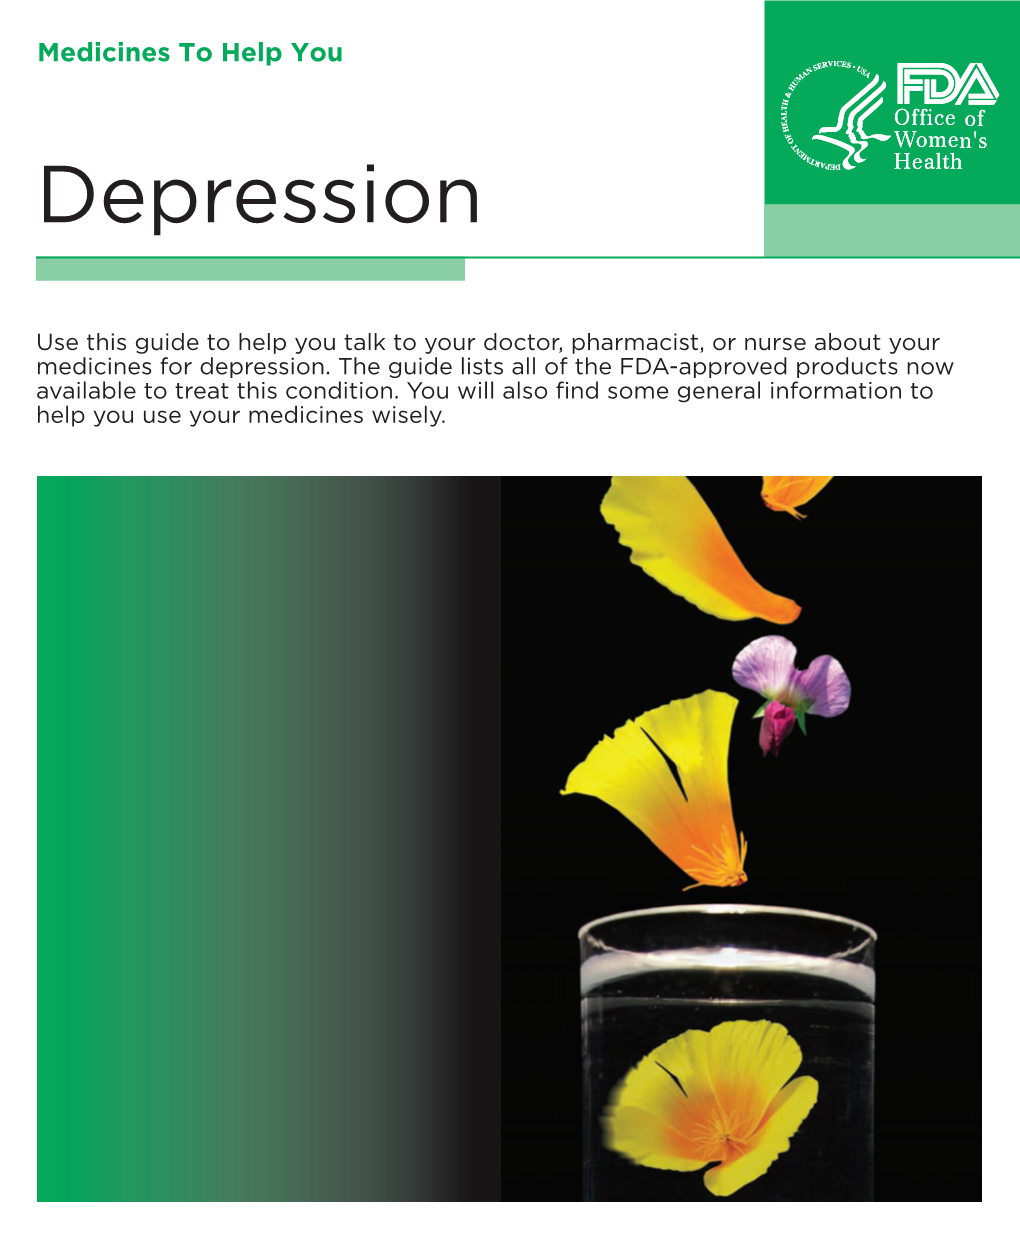 Medicines to Help You: Depression